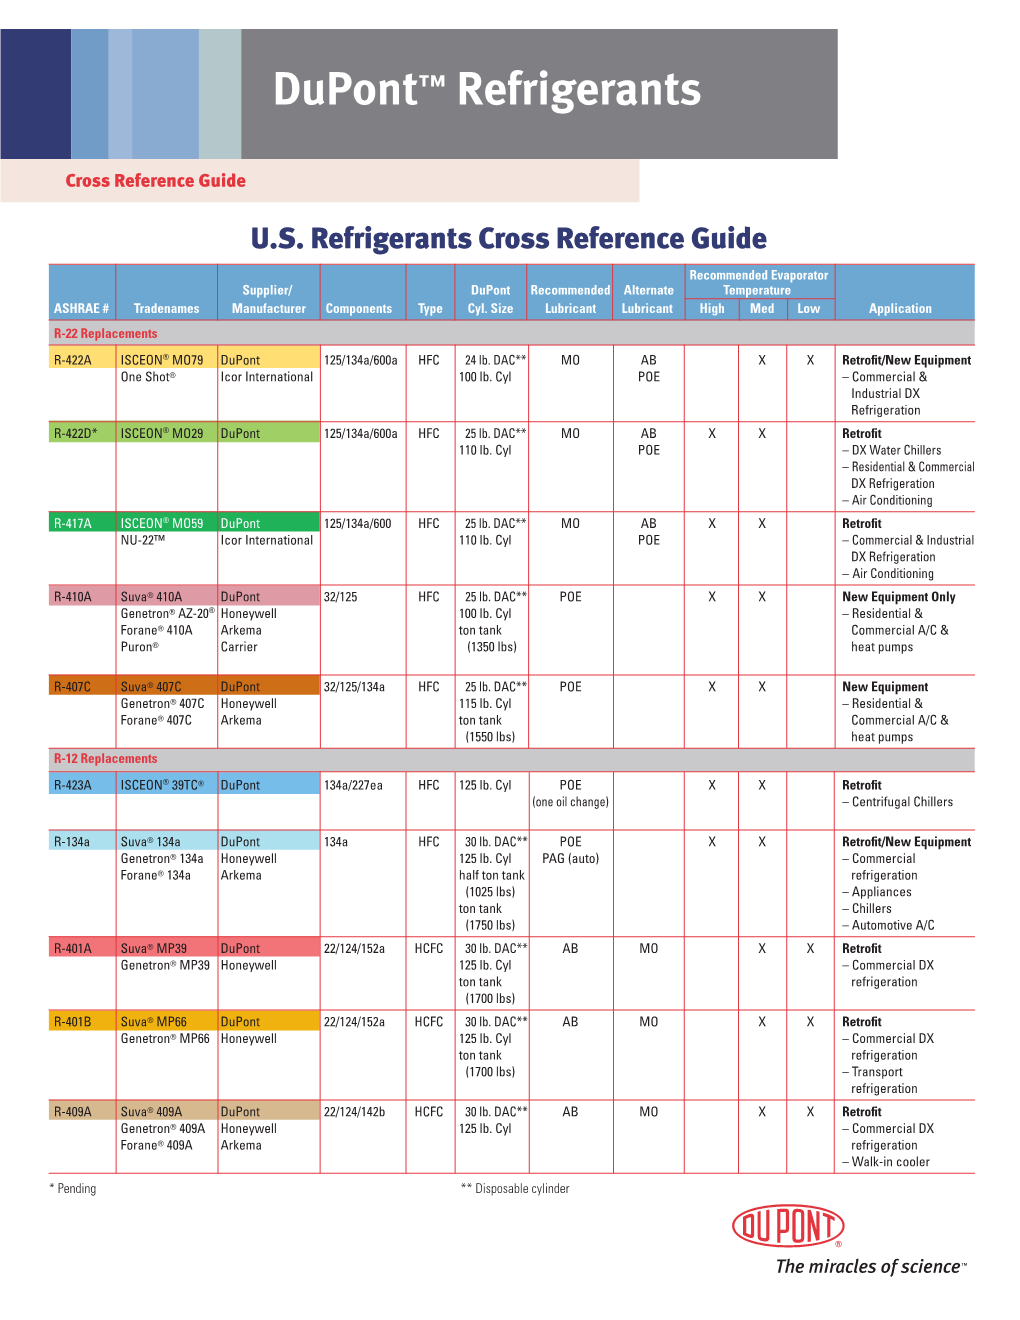 U.S. Refrigerants Cross-Reference Guide